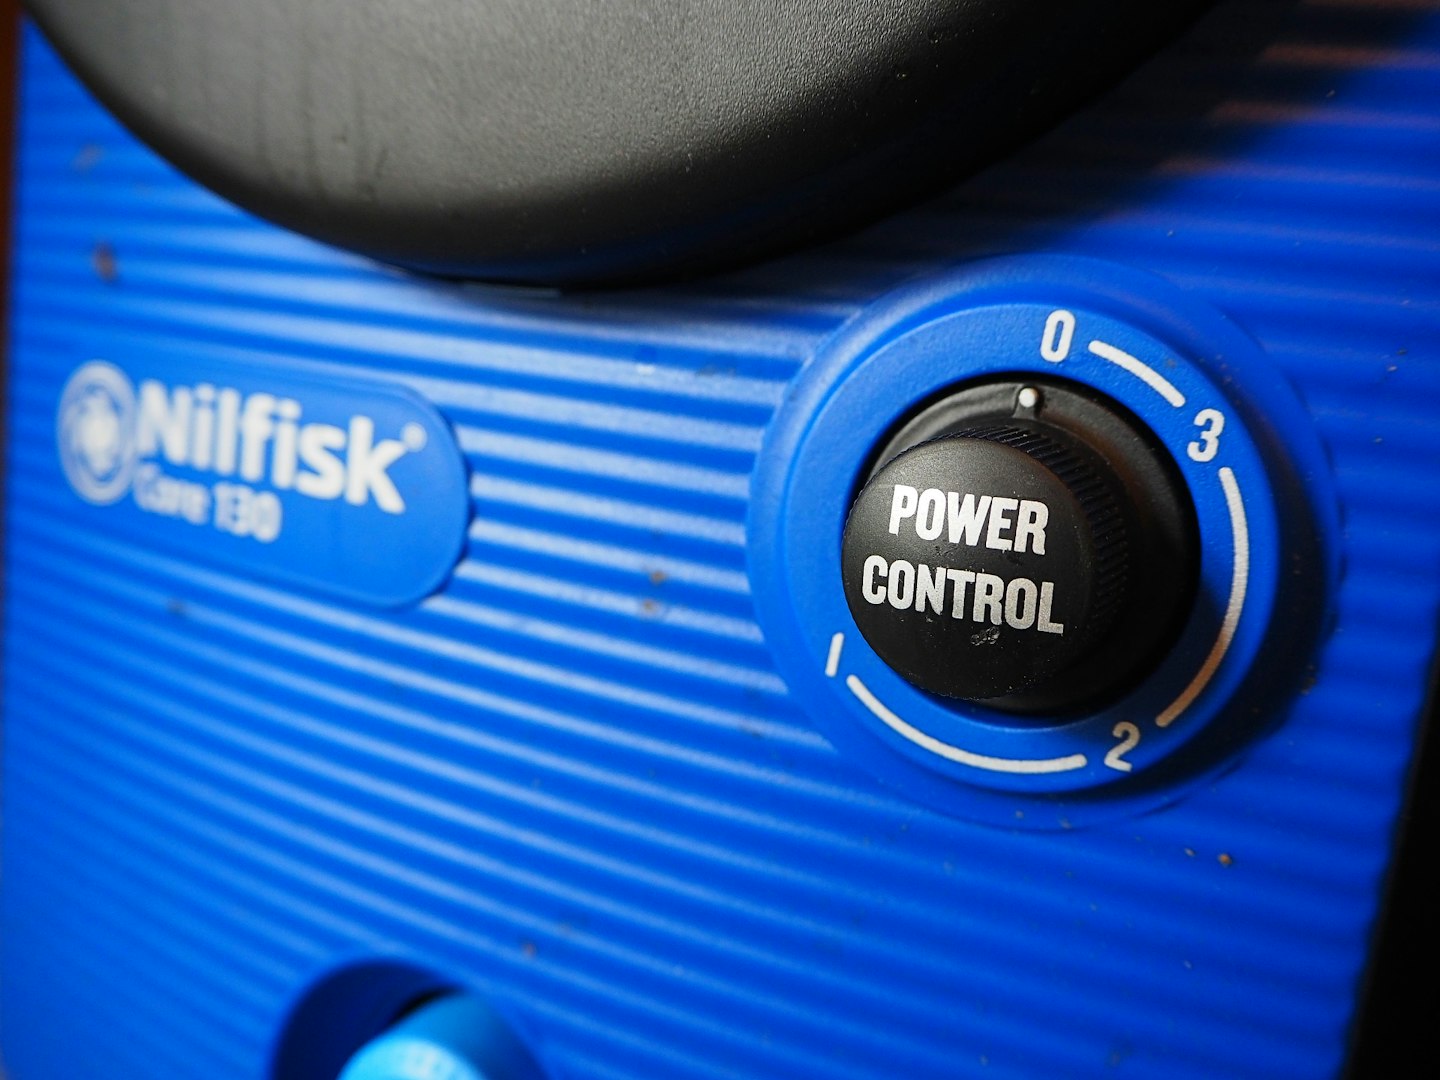 Power Control knob on Nilfisk Core 130